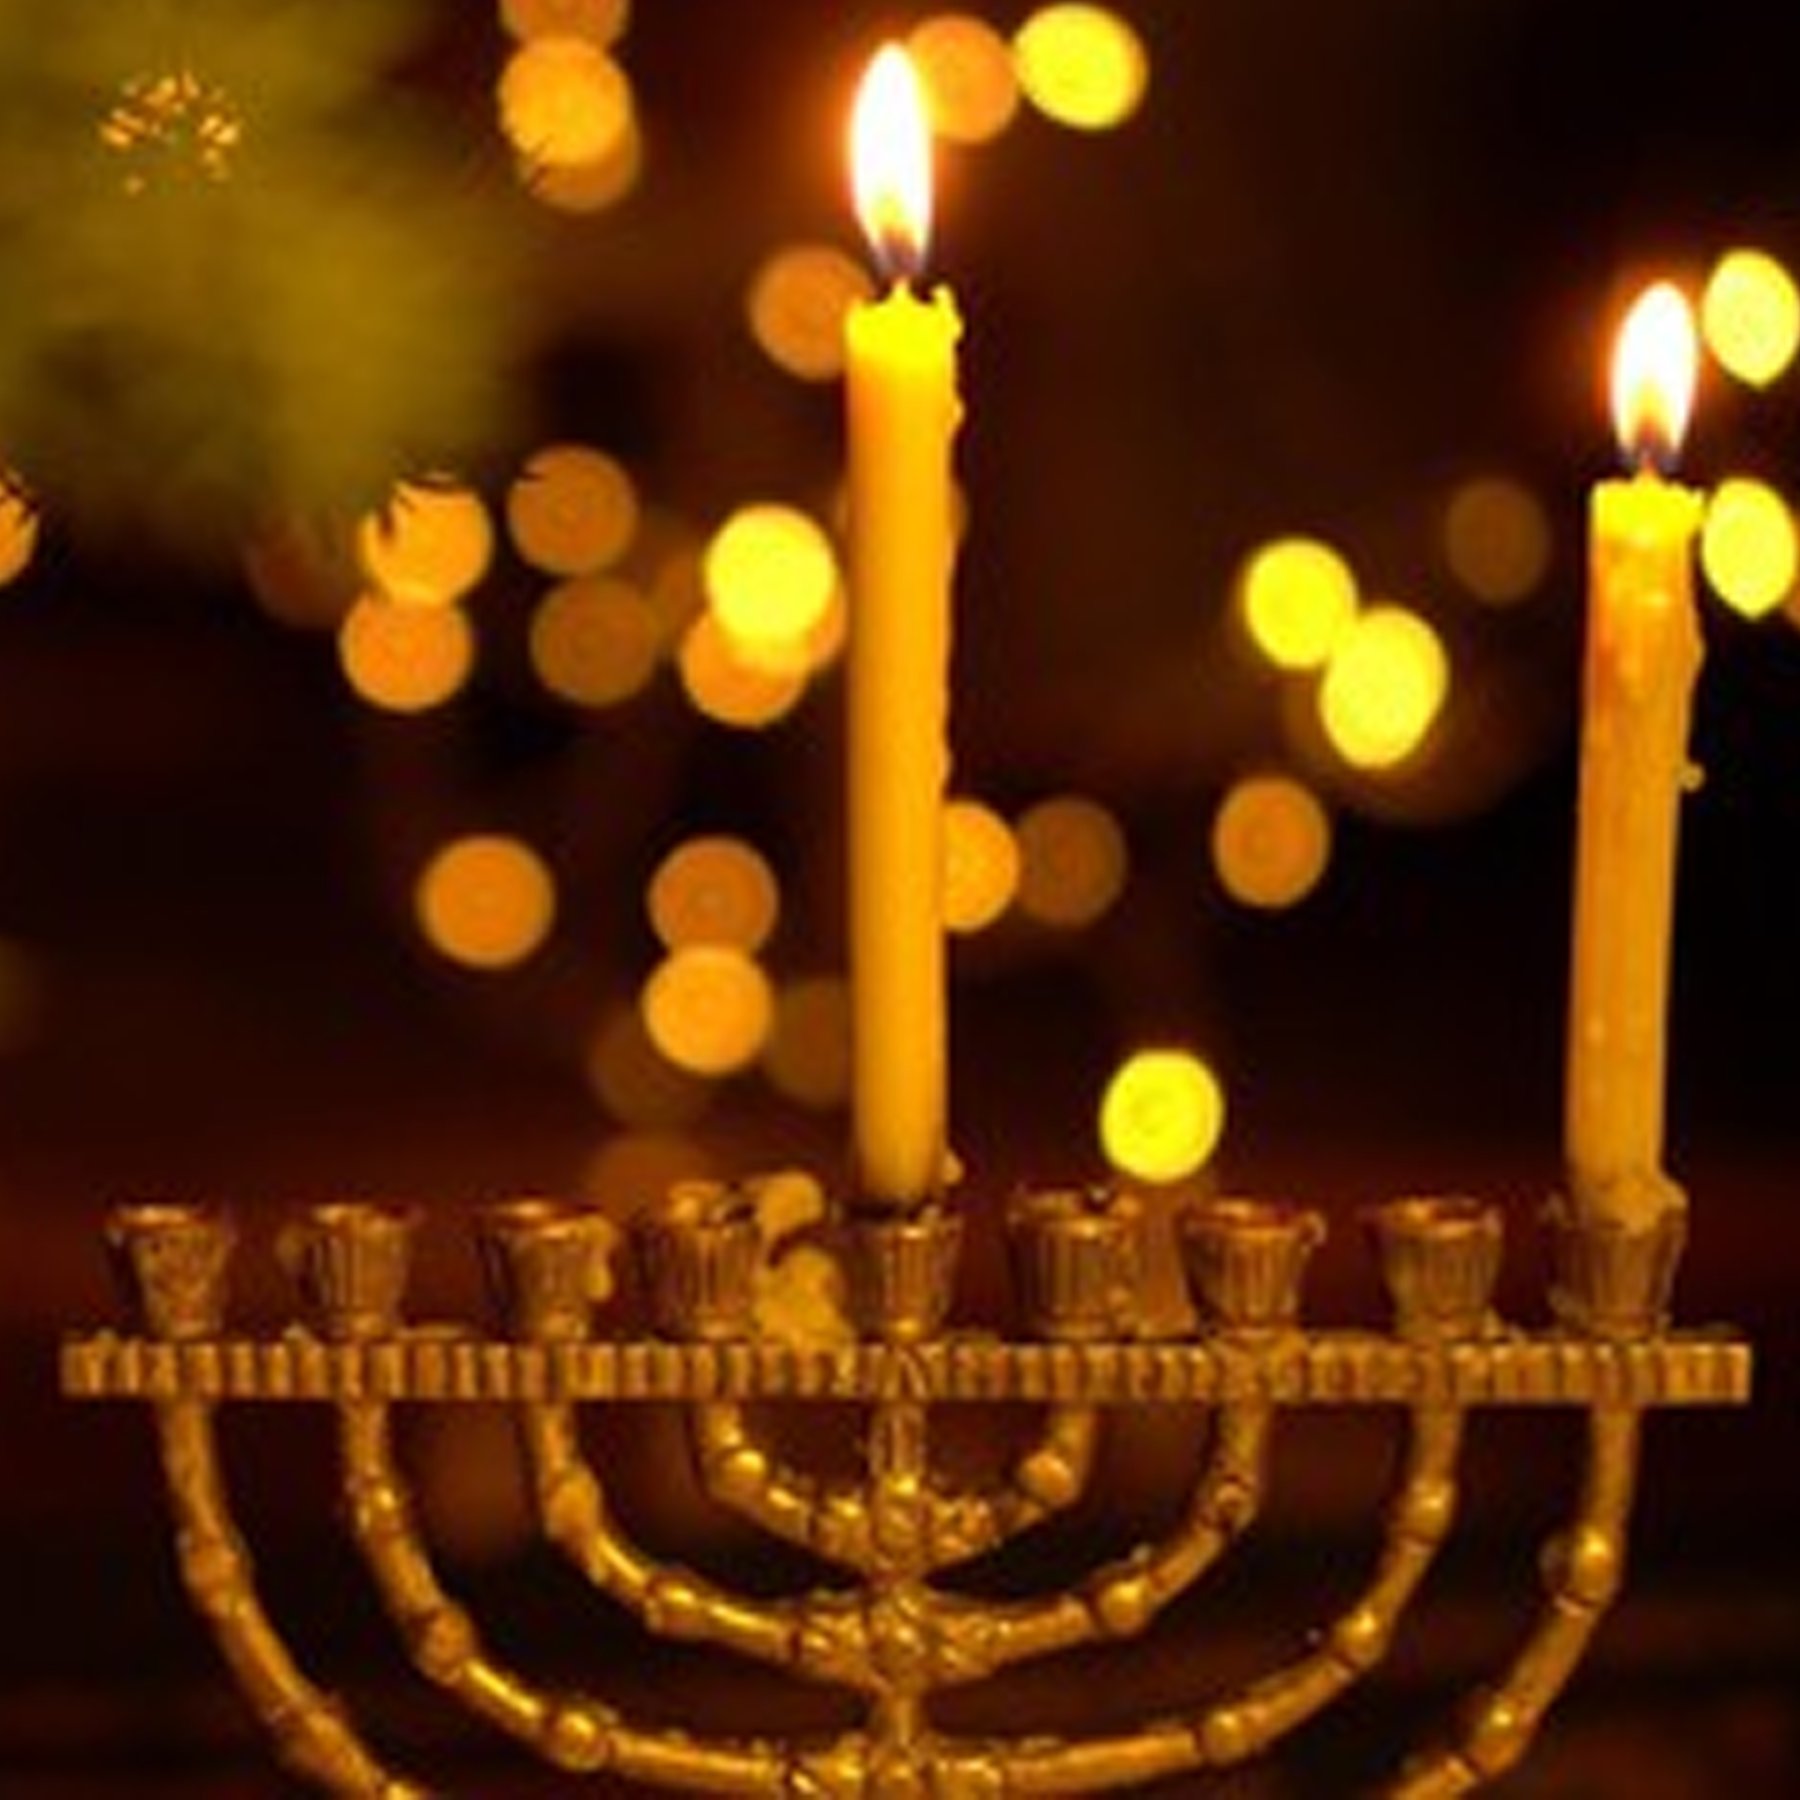 https://web.ece.ucsb.edu/~parhami/images_folder/f22-231207-hanukkah-first-night-menorah.jpg